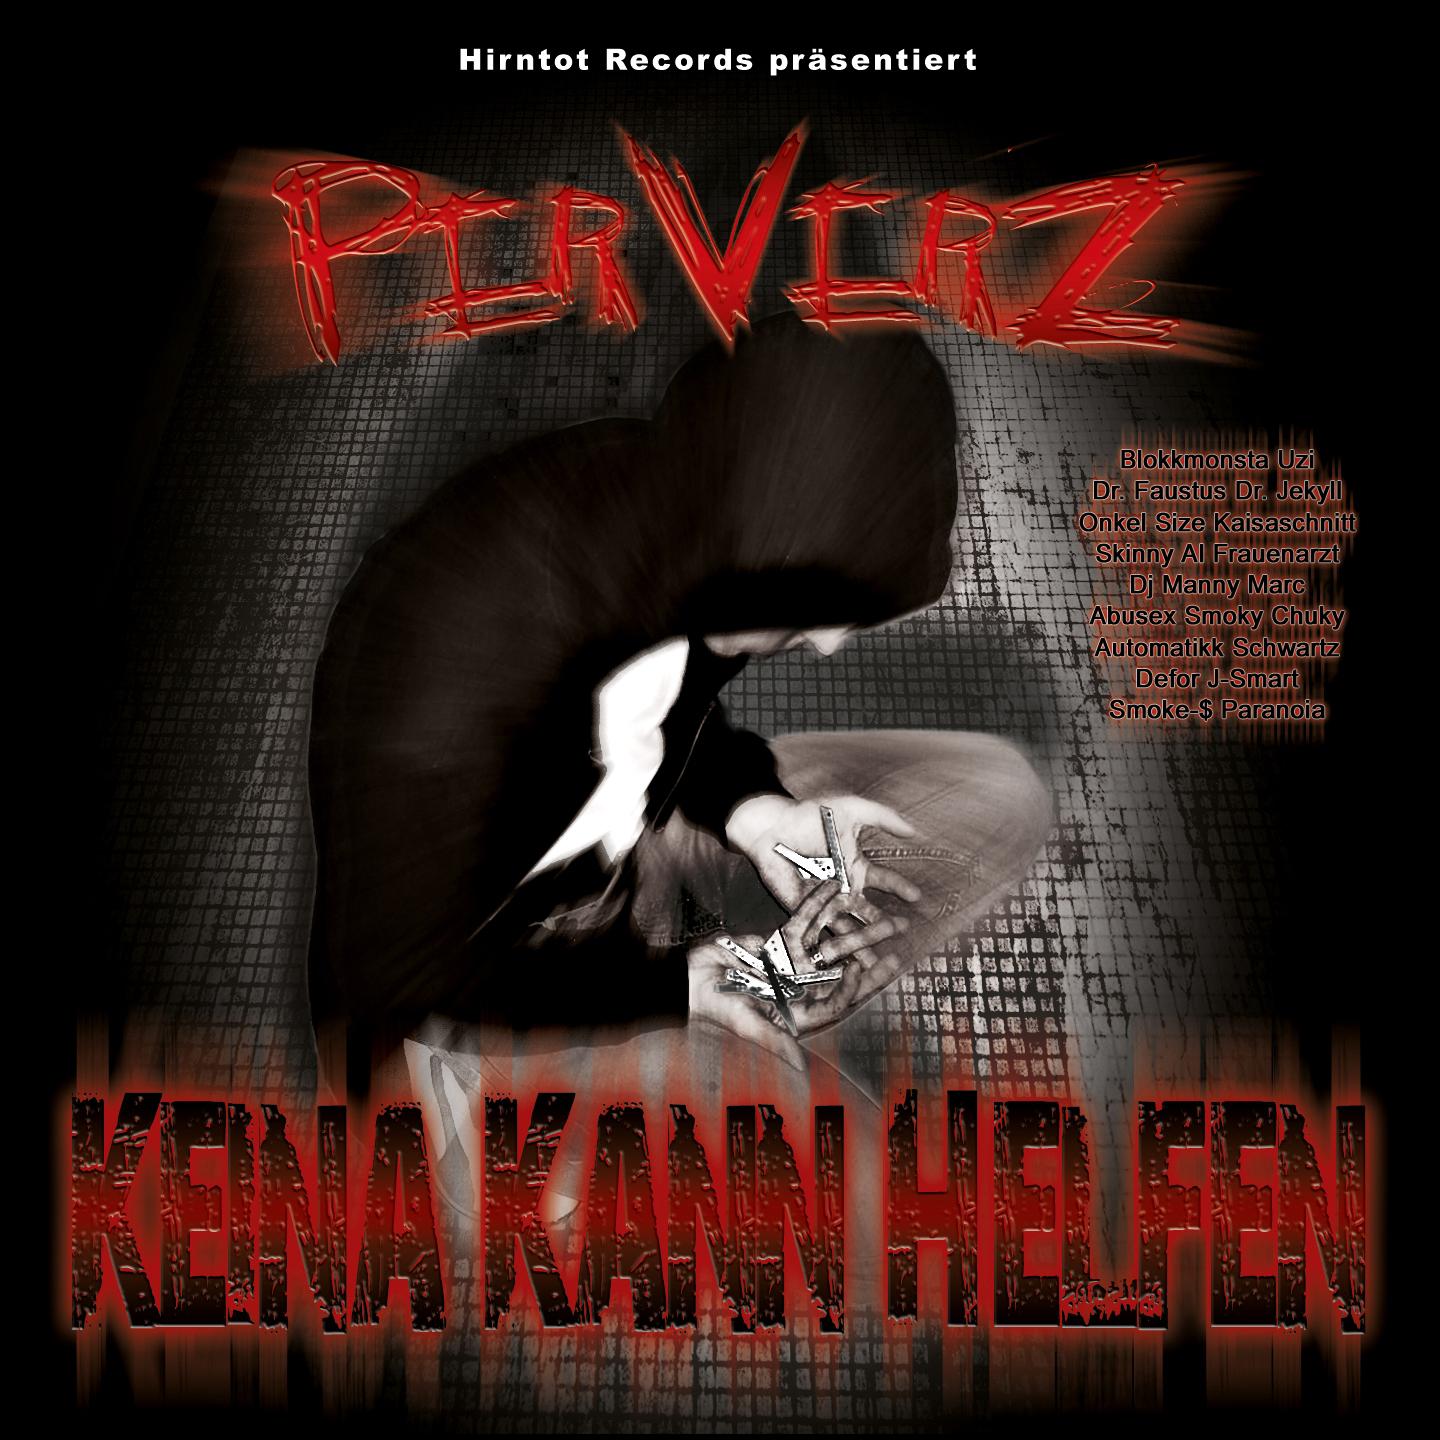 Perverz - Yakuza Killer Kartell